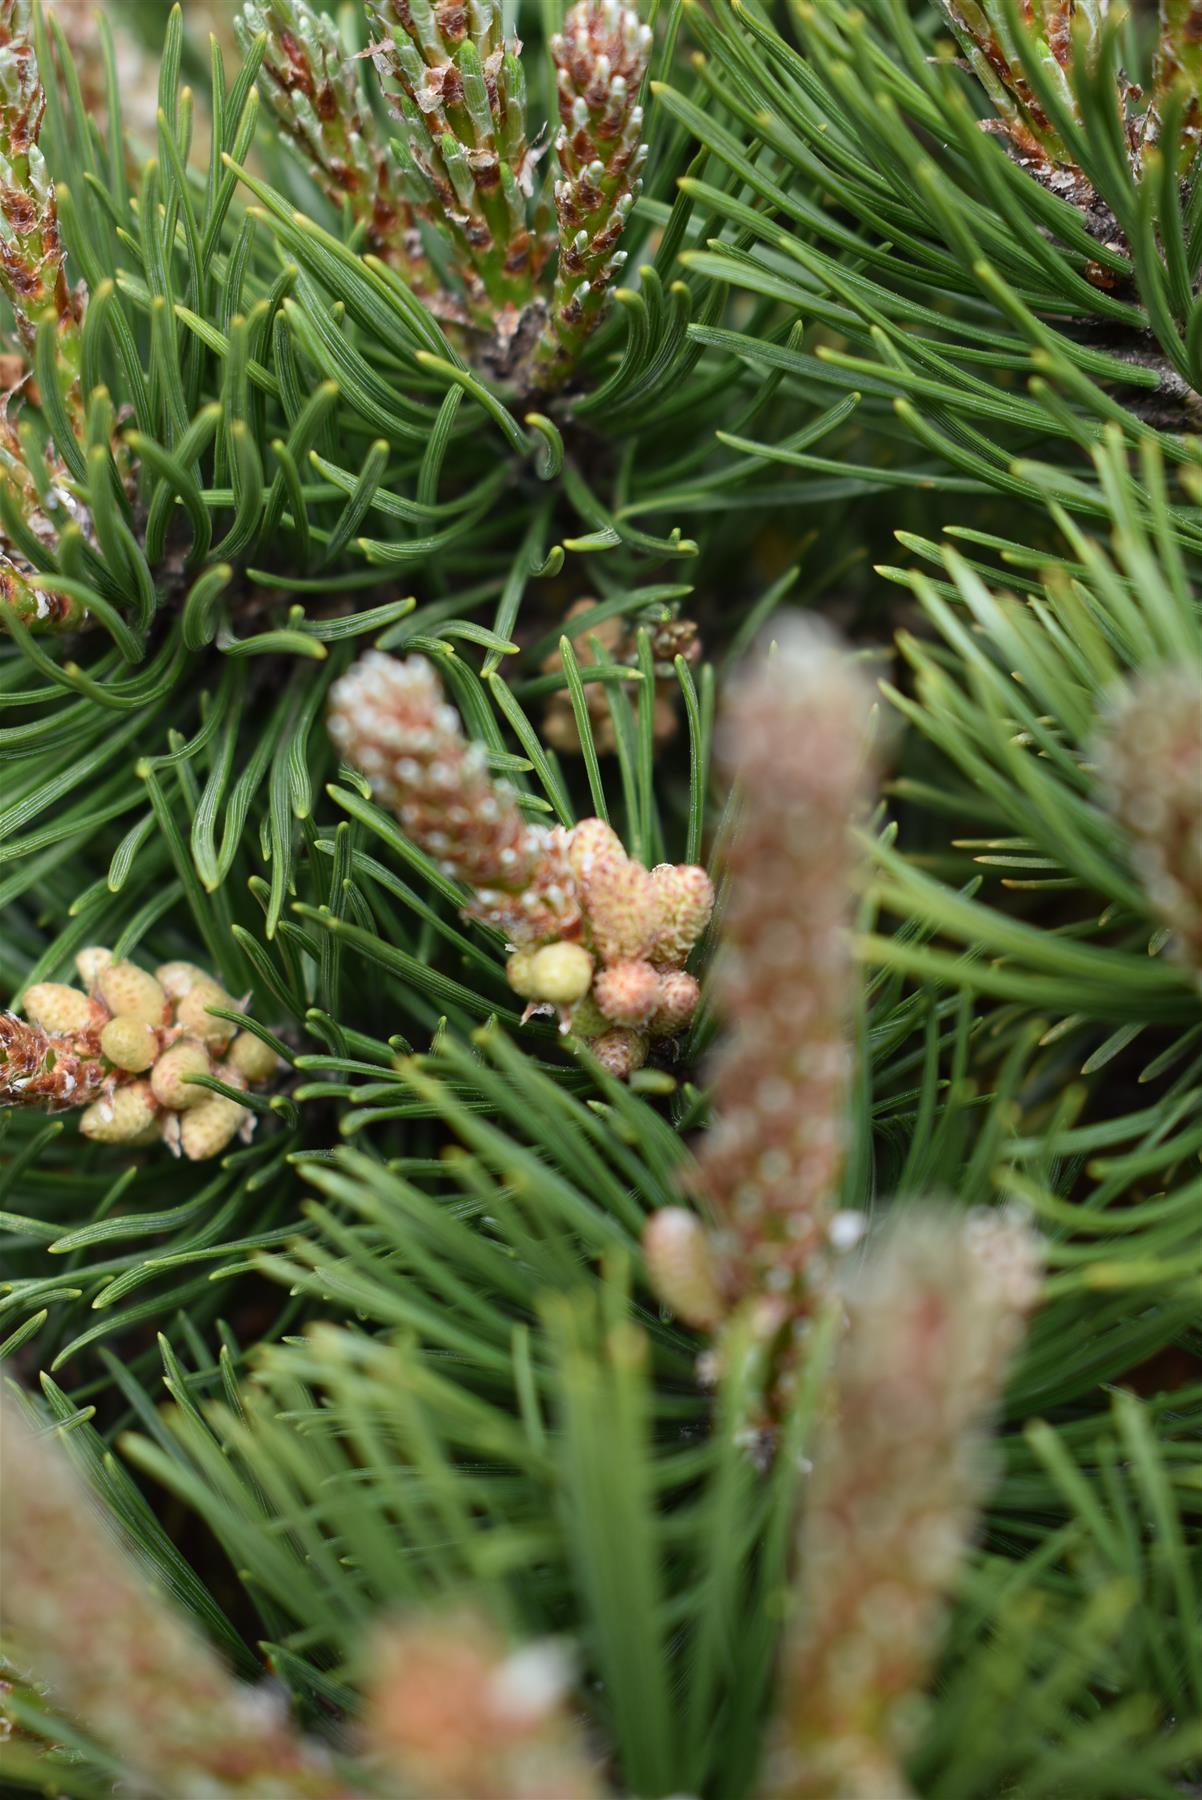 Pinus mugo 'Klostergrun' | Dwarf mountain pine - Height 20-30cm - Width 25-30cm - 12lt